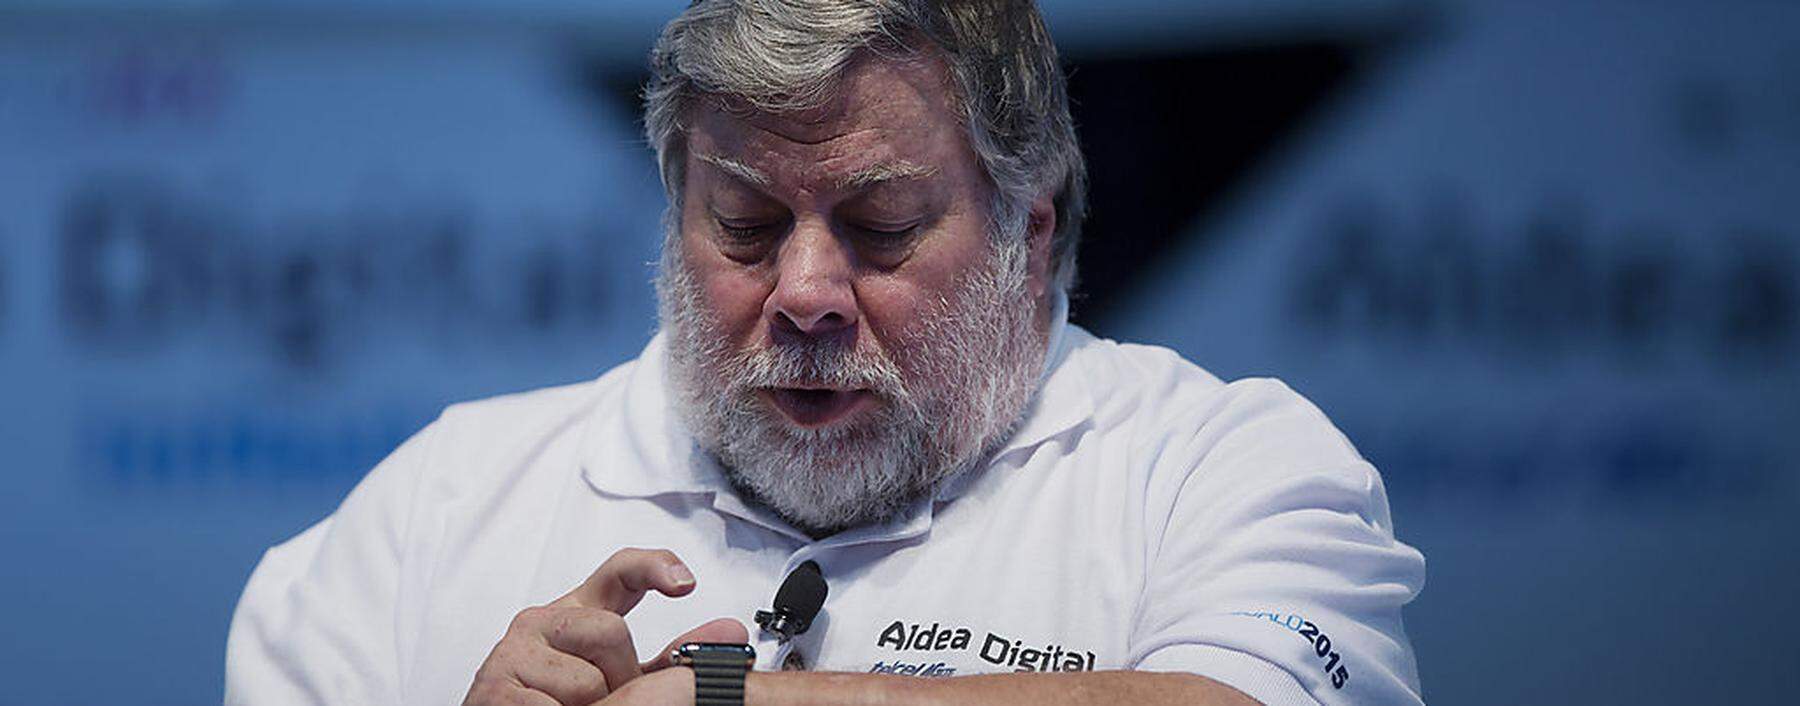 Apple Inc. Co-Founder Steve Wozniak Speaks At Opening Of Telcel Digital Village